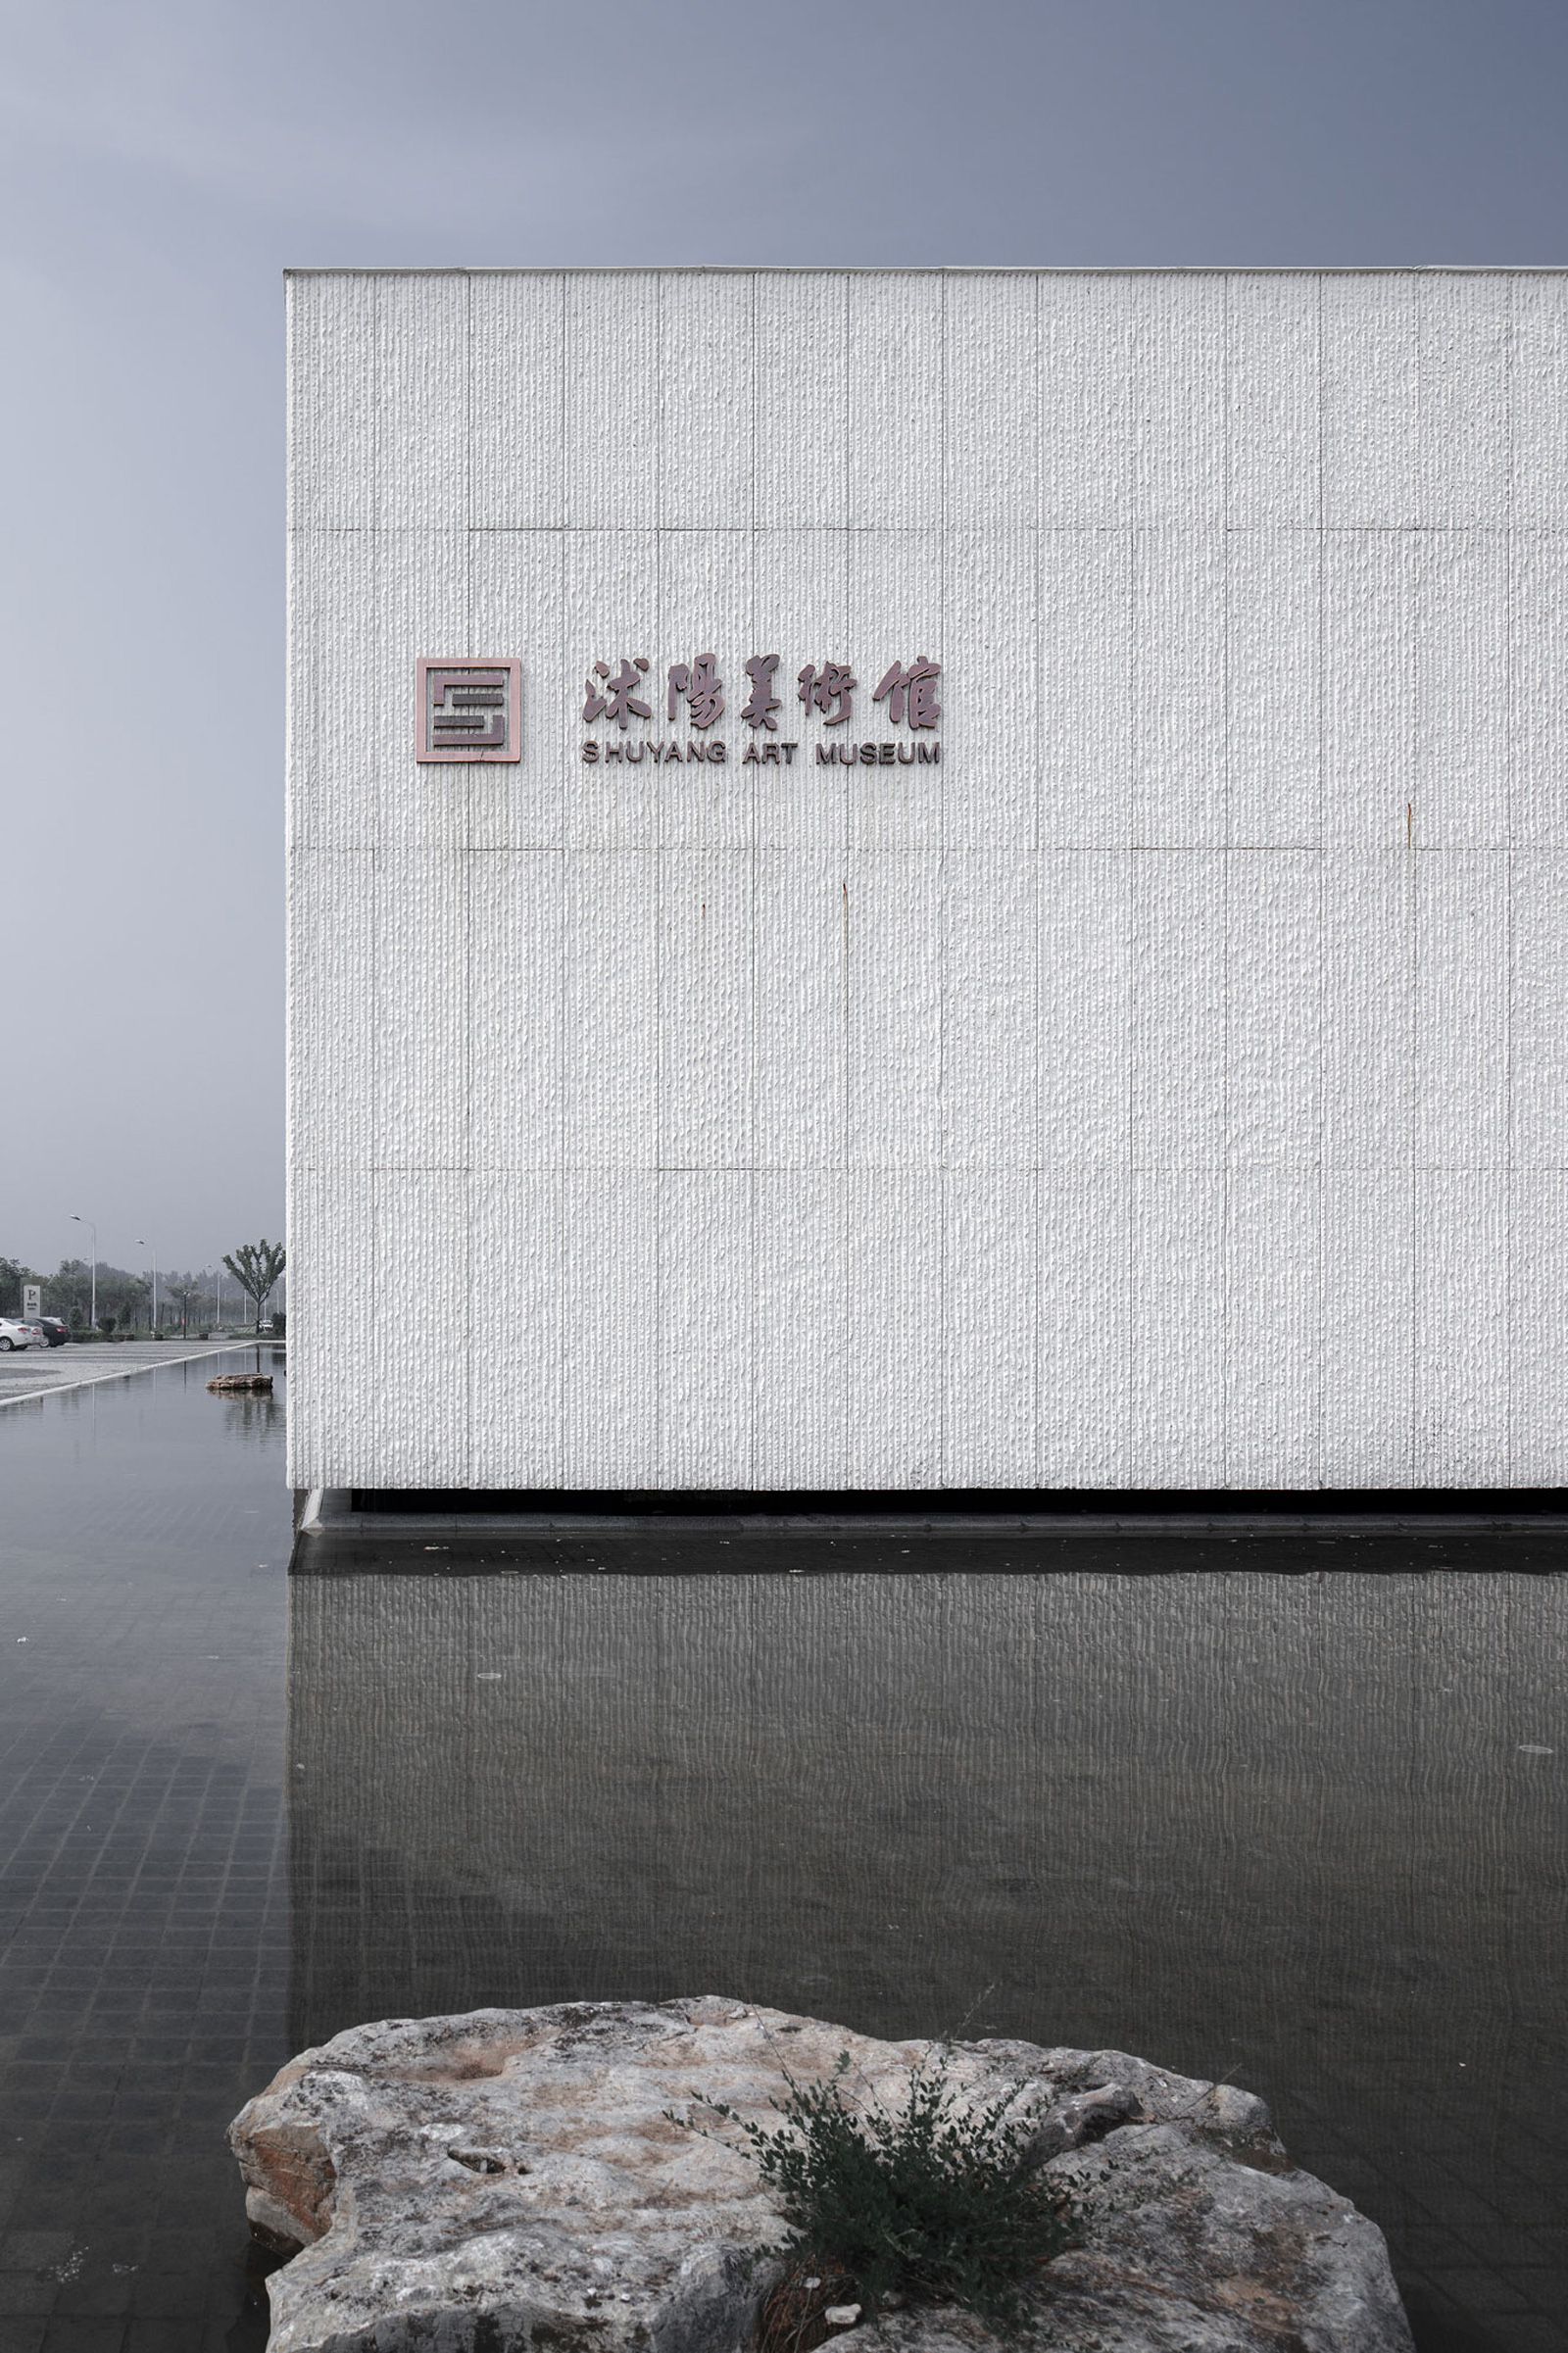 shuyang-art-gallery-uad-10-the-white-wall-facade.jpg